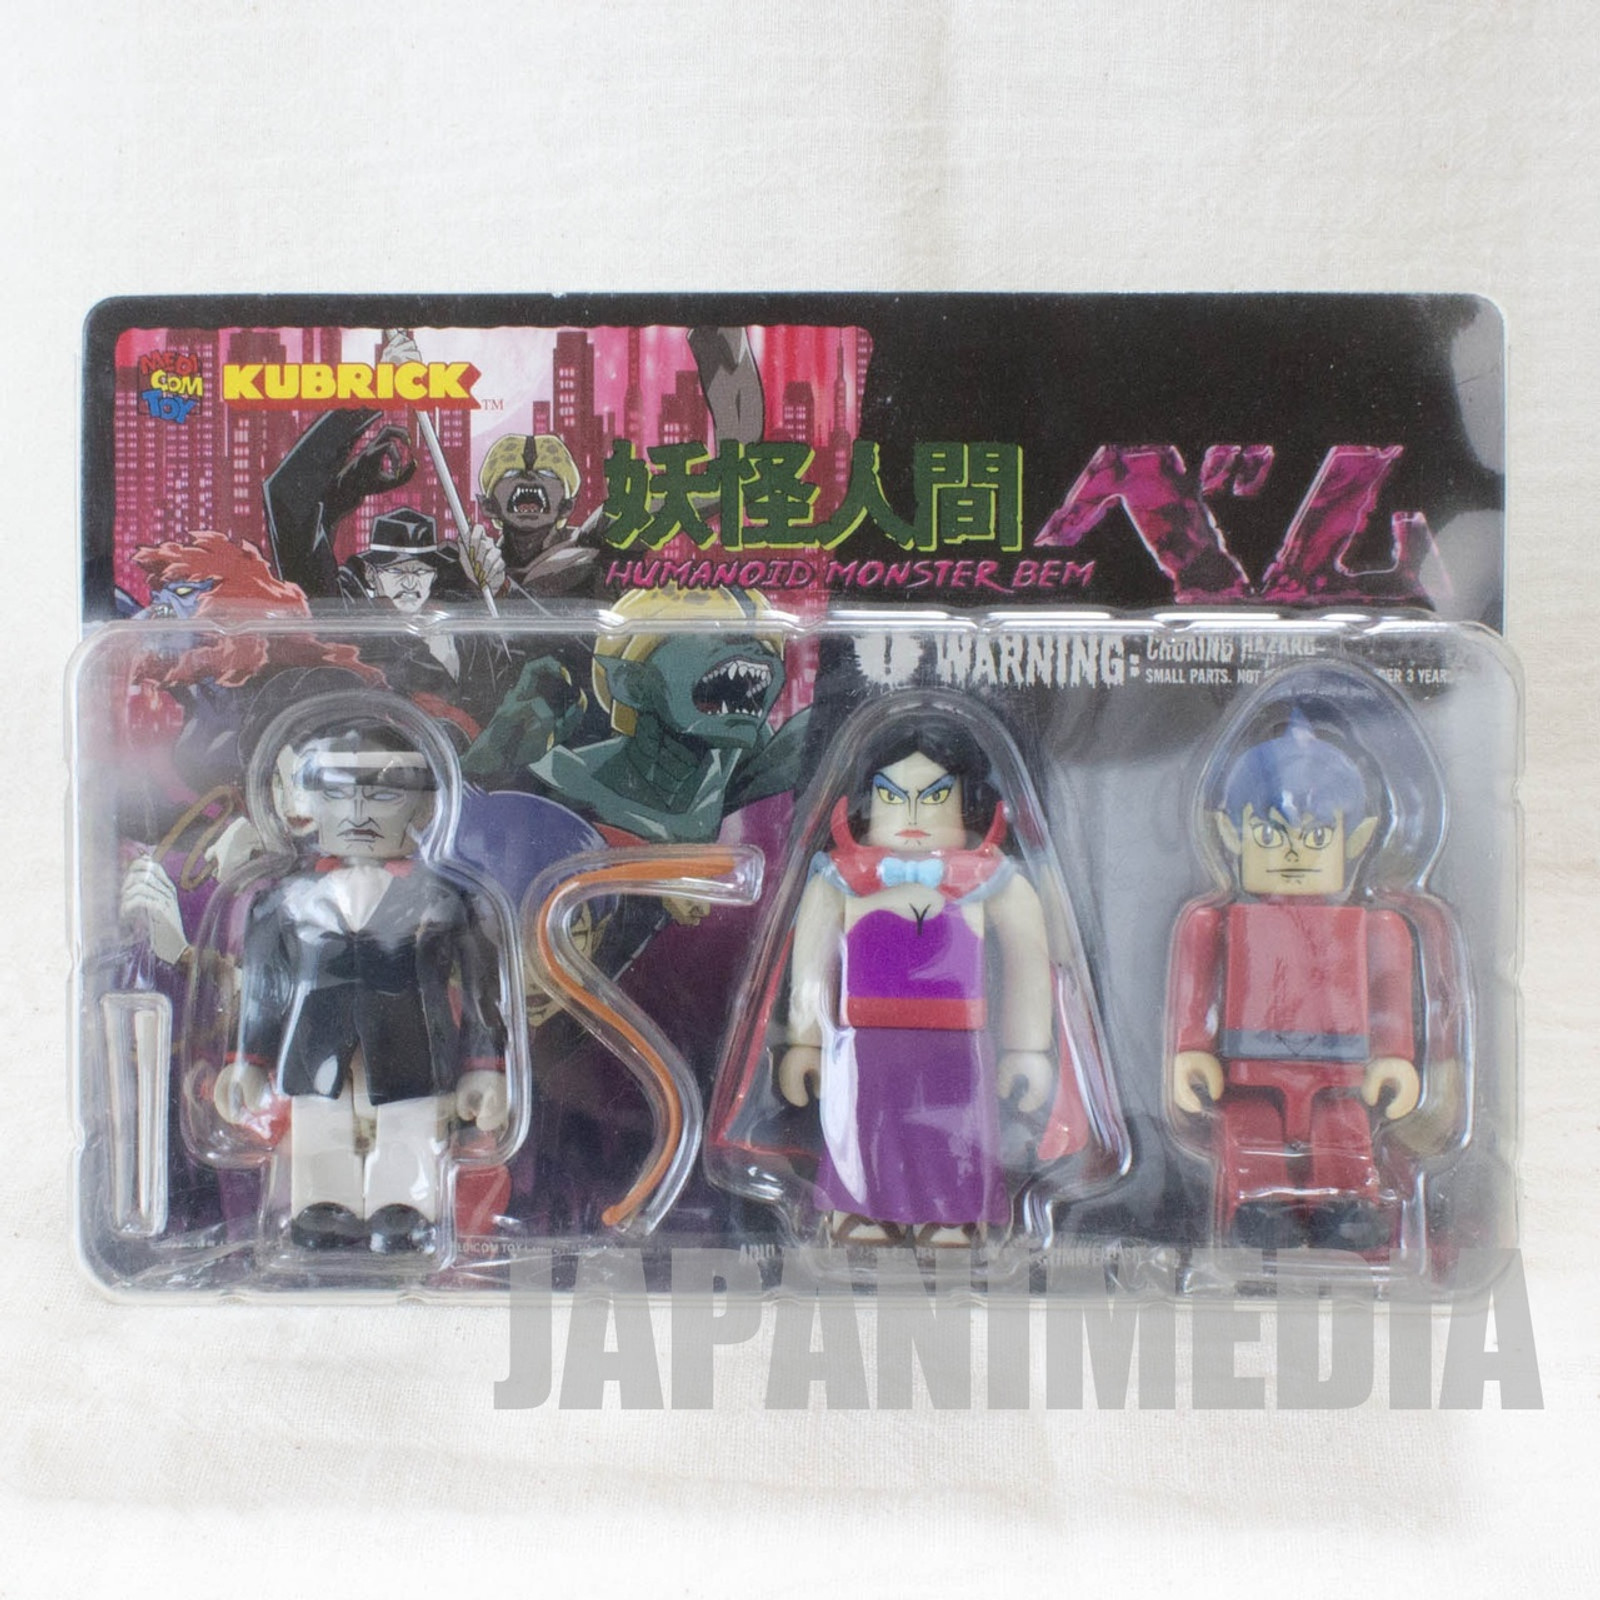 Humanoid Monster Bem Bella Belo Human Kubrick Set Figure Medicom Toy JAPAN  ANIME - Japanimedia Store